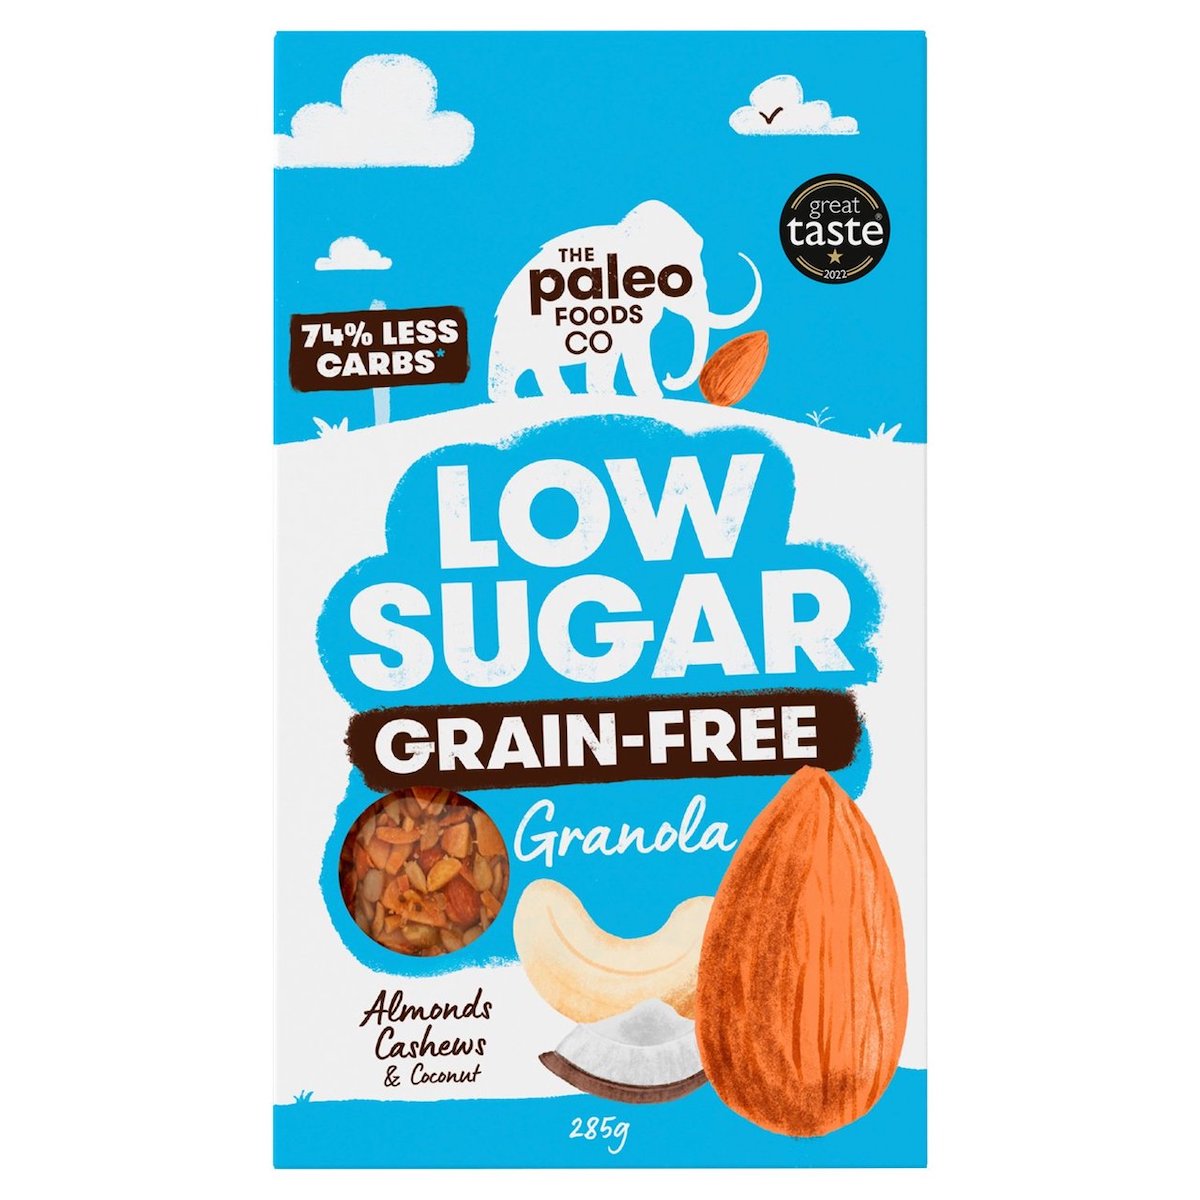 The Paleo Foods Co Low Sugar Grain-Free Granola 285g